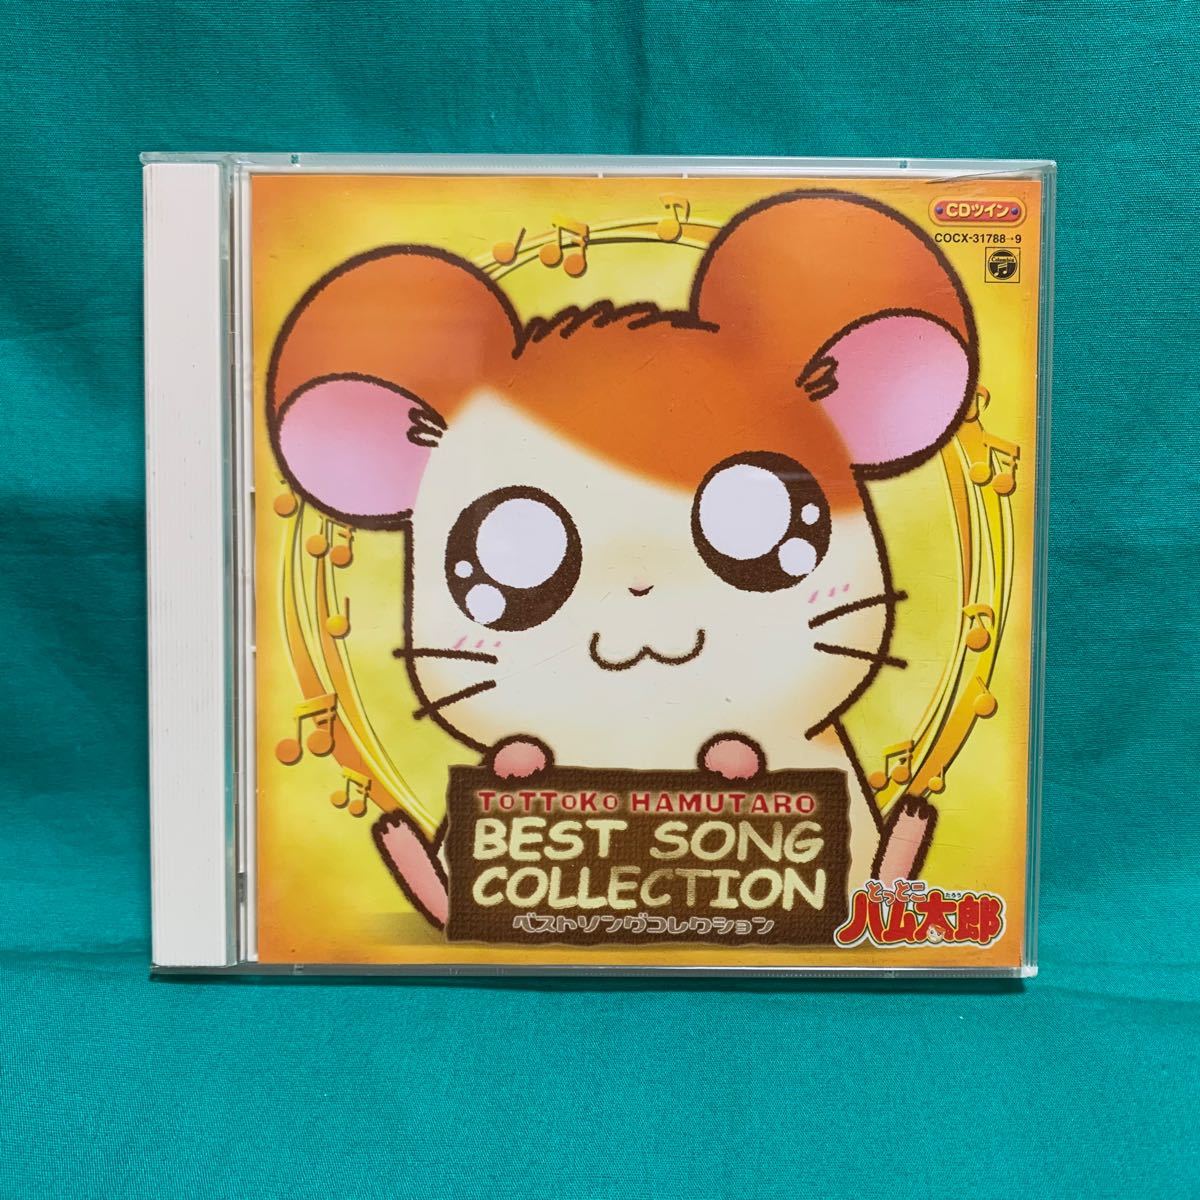 CDツイン とっとこハム太郎 ベストソングコレクション - アニメ